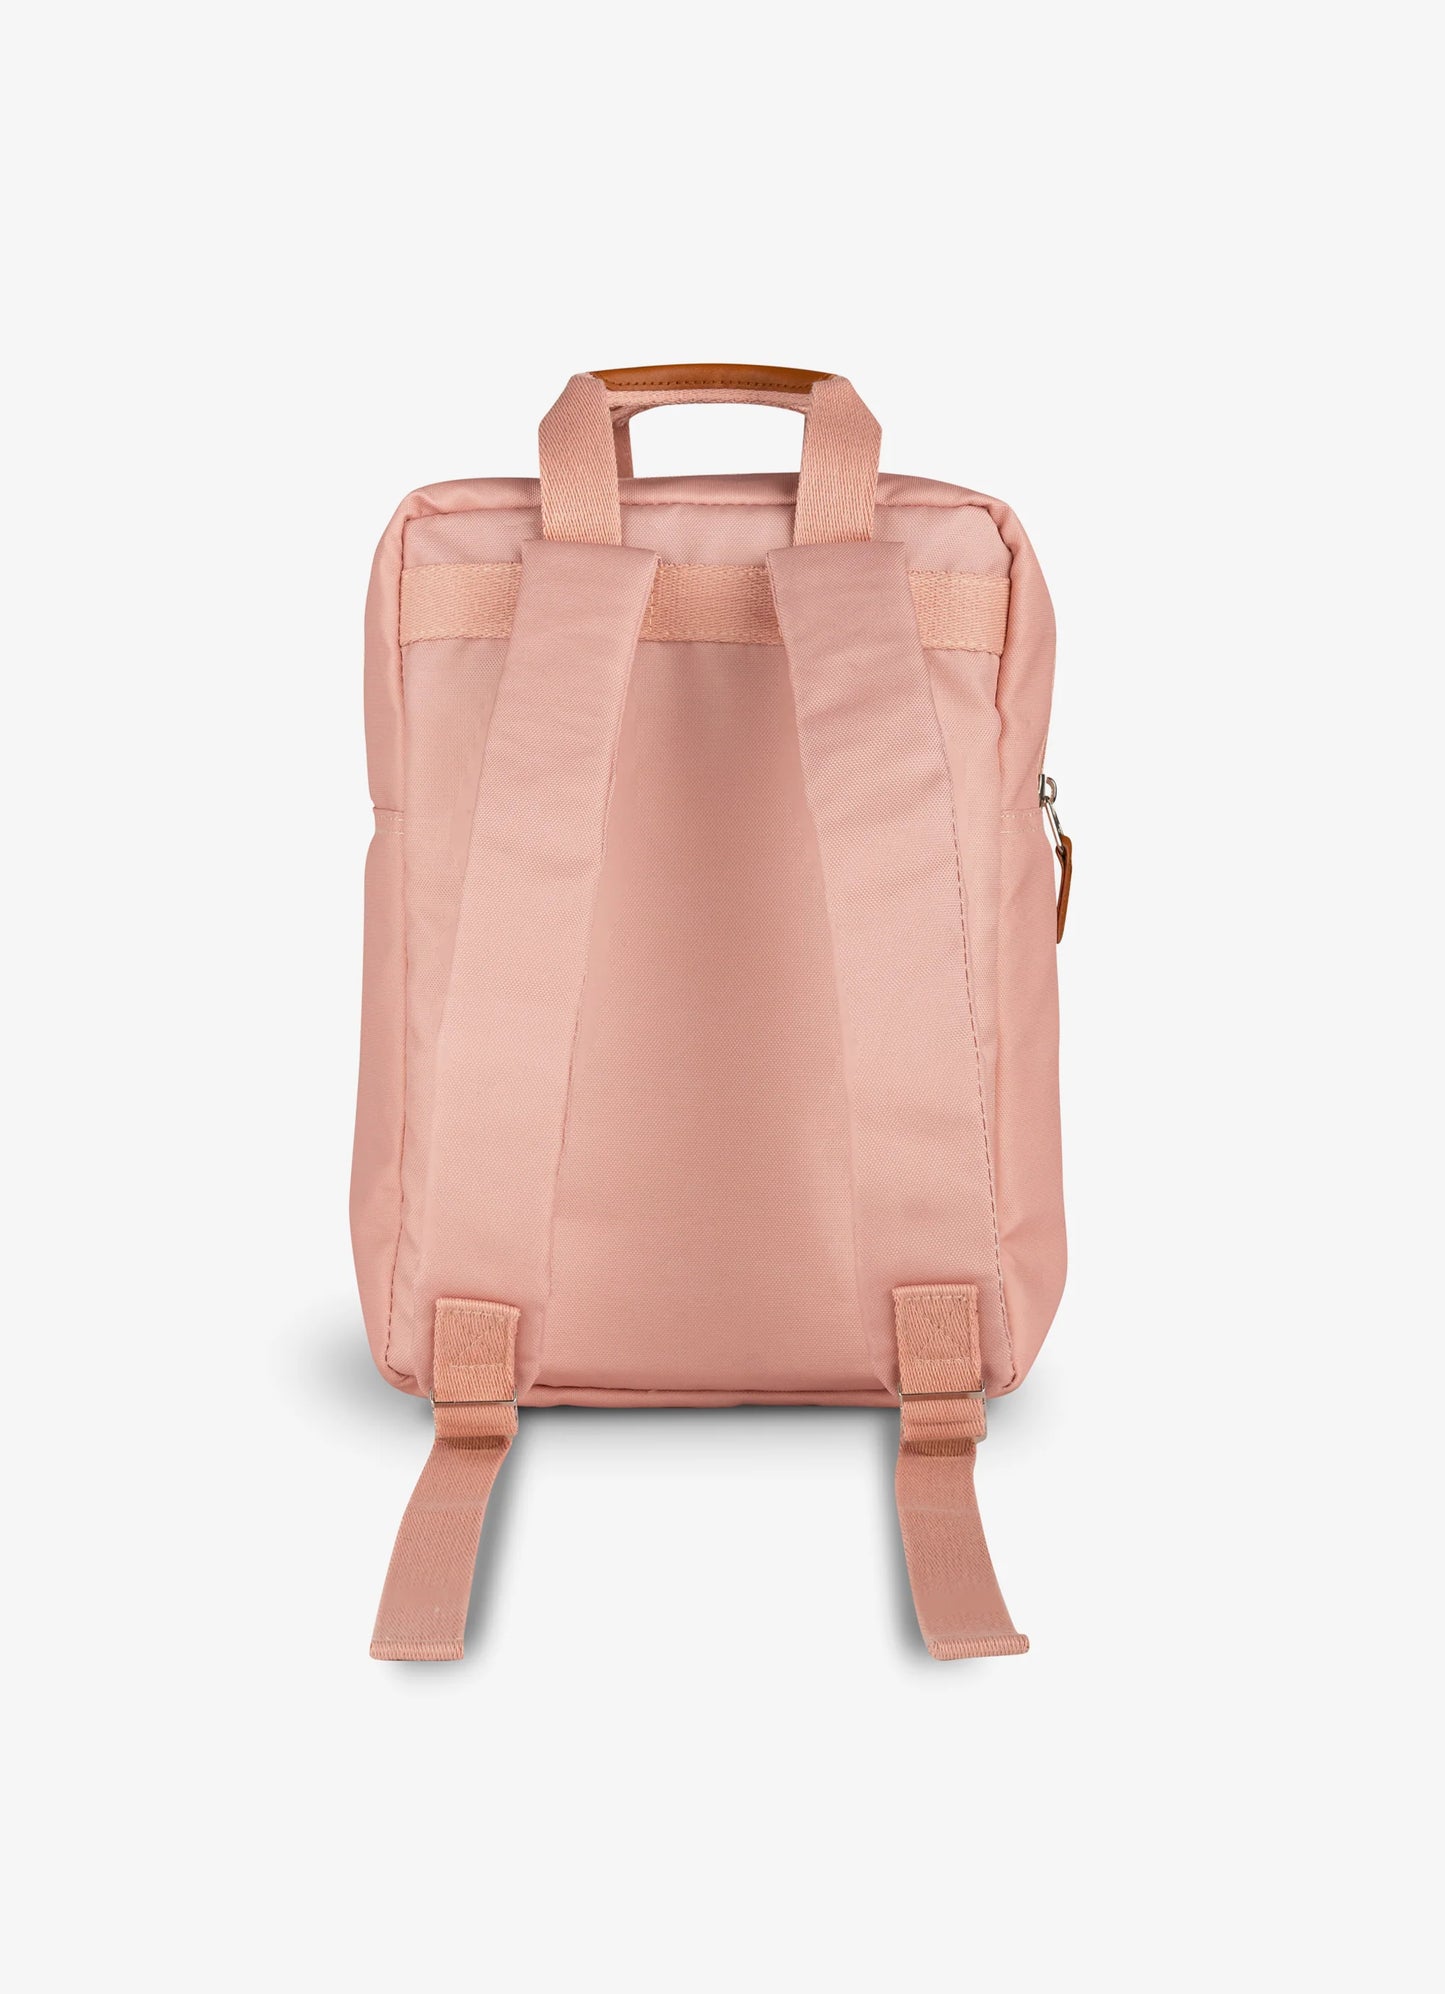 Kids Backpack Pink